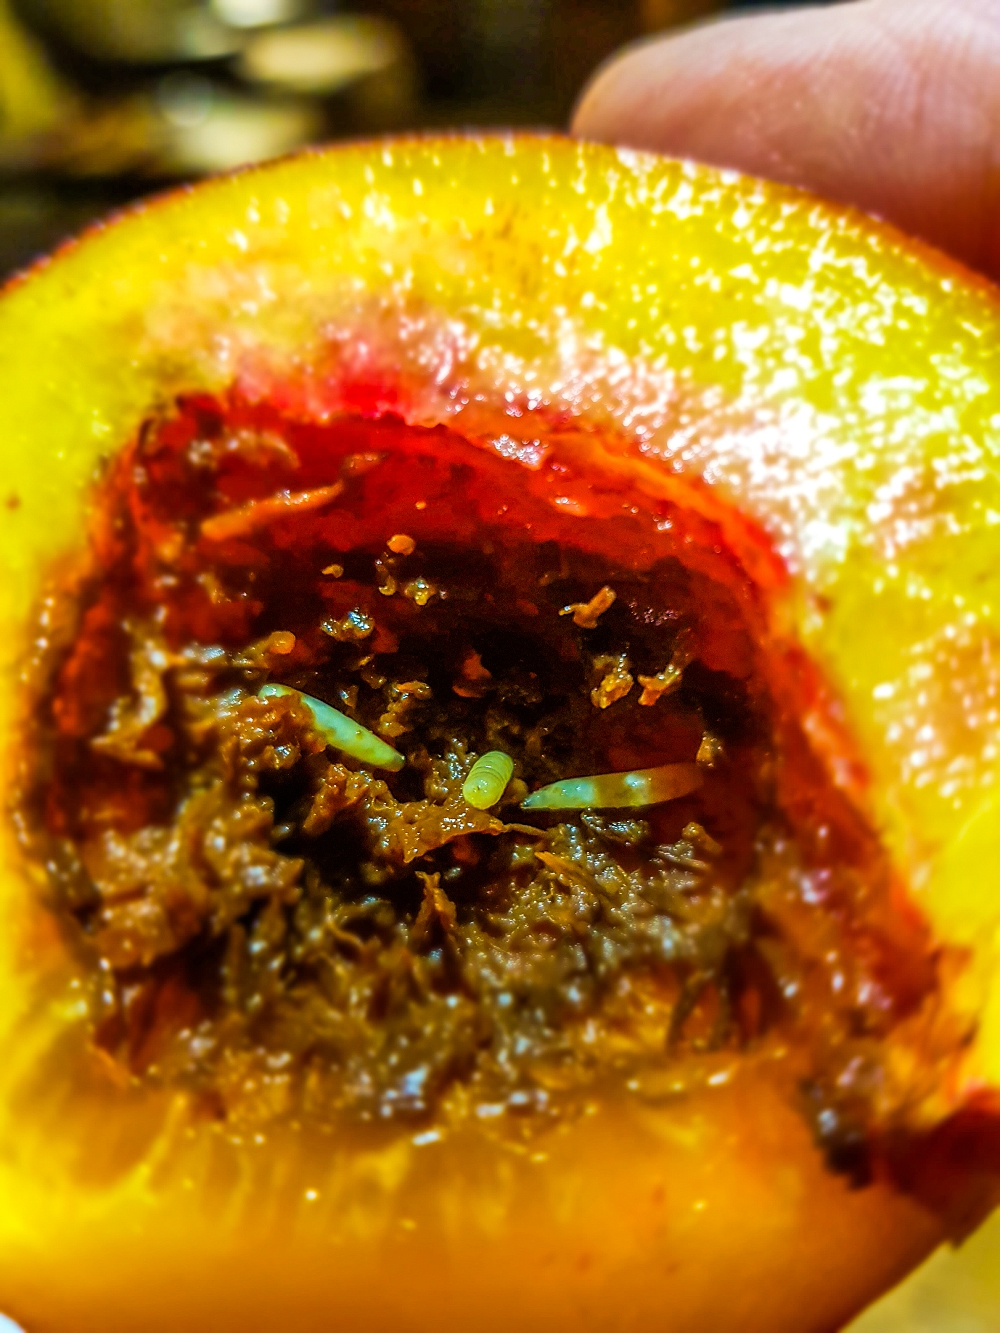 https://growgreatfruit.com/wp-content/uploads/2021/01/fruit-fly-larvae-in-nectarine-bright-1000x1333-1.jpg